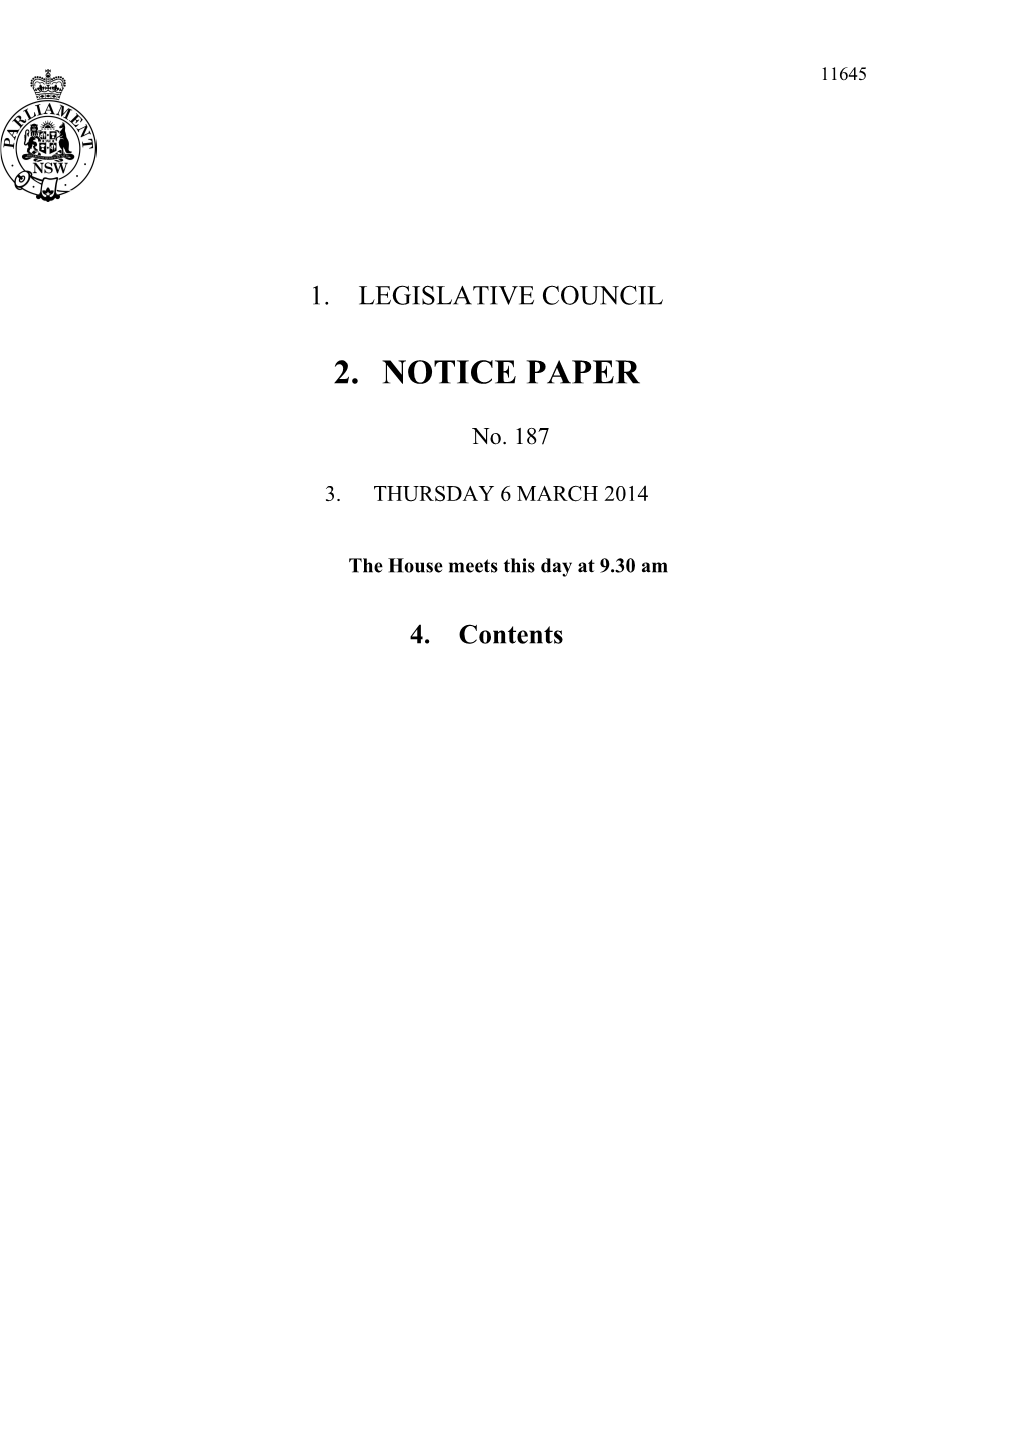 Legislative Council Notice Paper No. 187 Thursday 6 March 2014